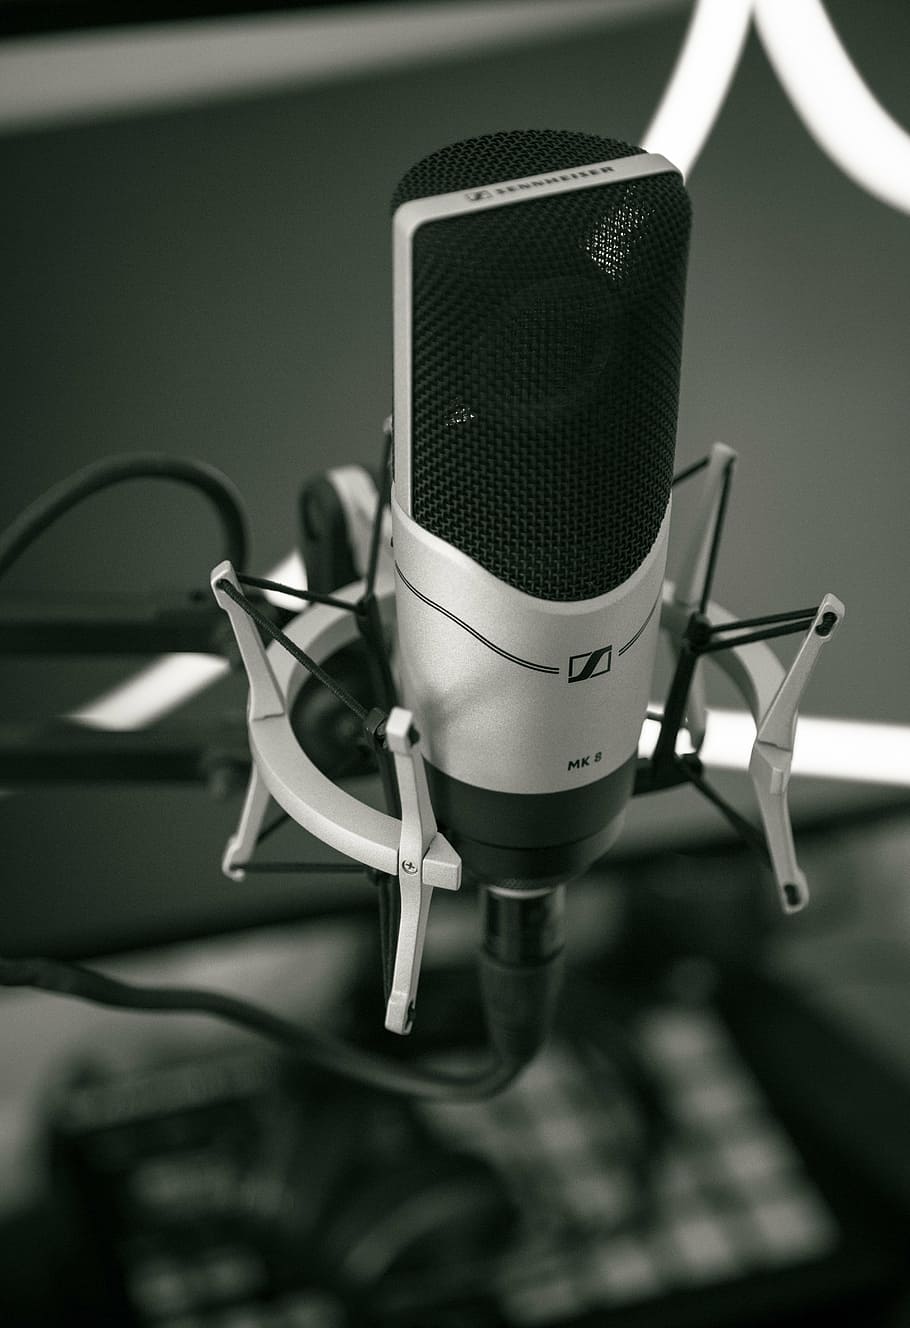 seletivo, fotografia de foco, microfone condensador, Preto, branco, microfone, filtro, música, Preto e branco, estúdio